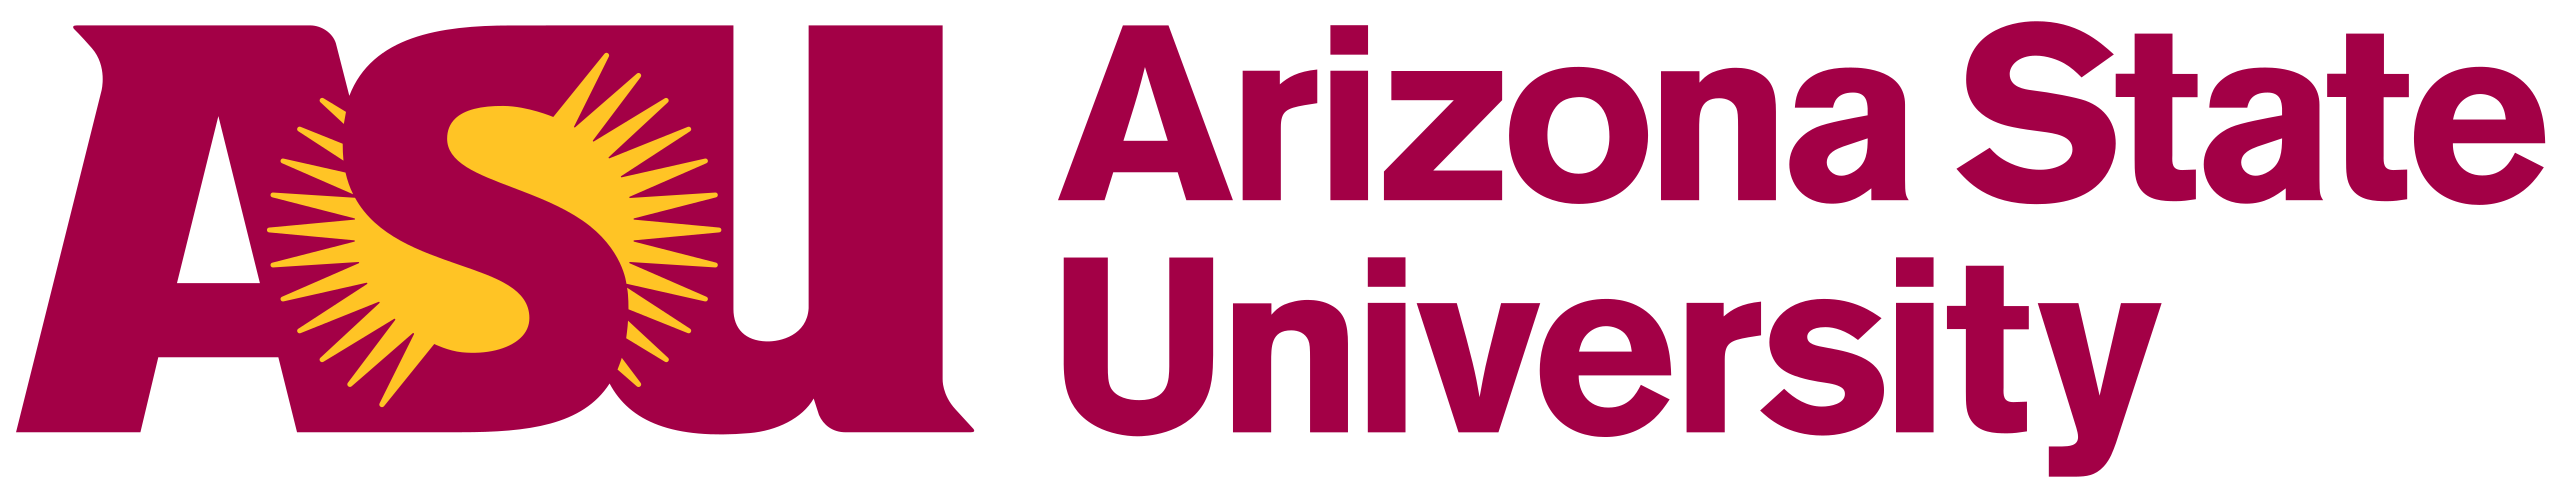 Arizona. State University. interview prep